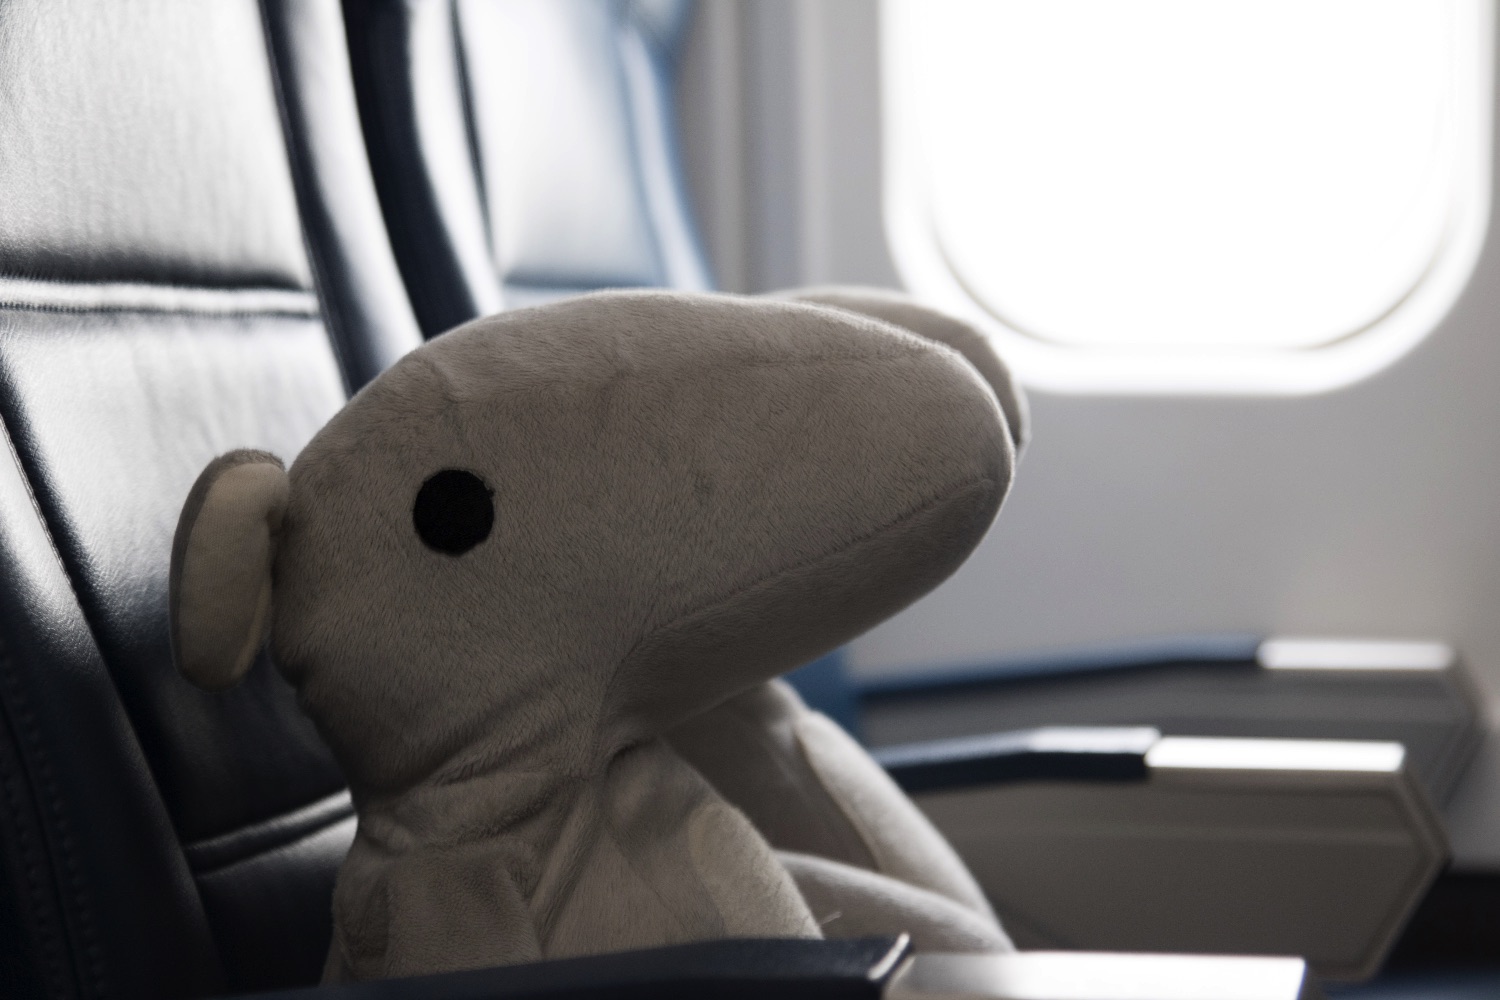 parihug stuffed animal kickstarter pari airplane passenger